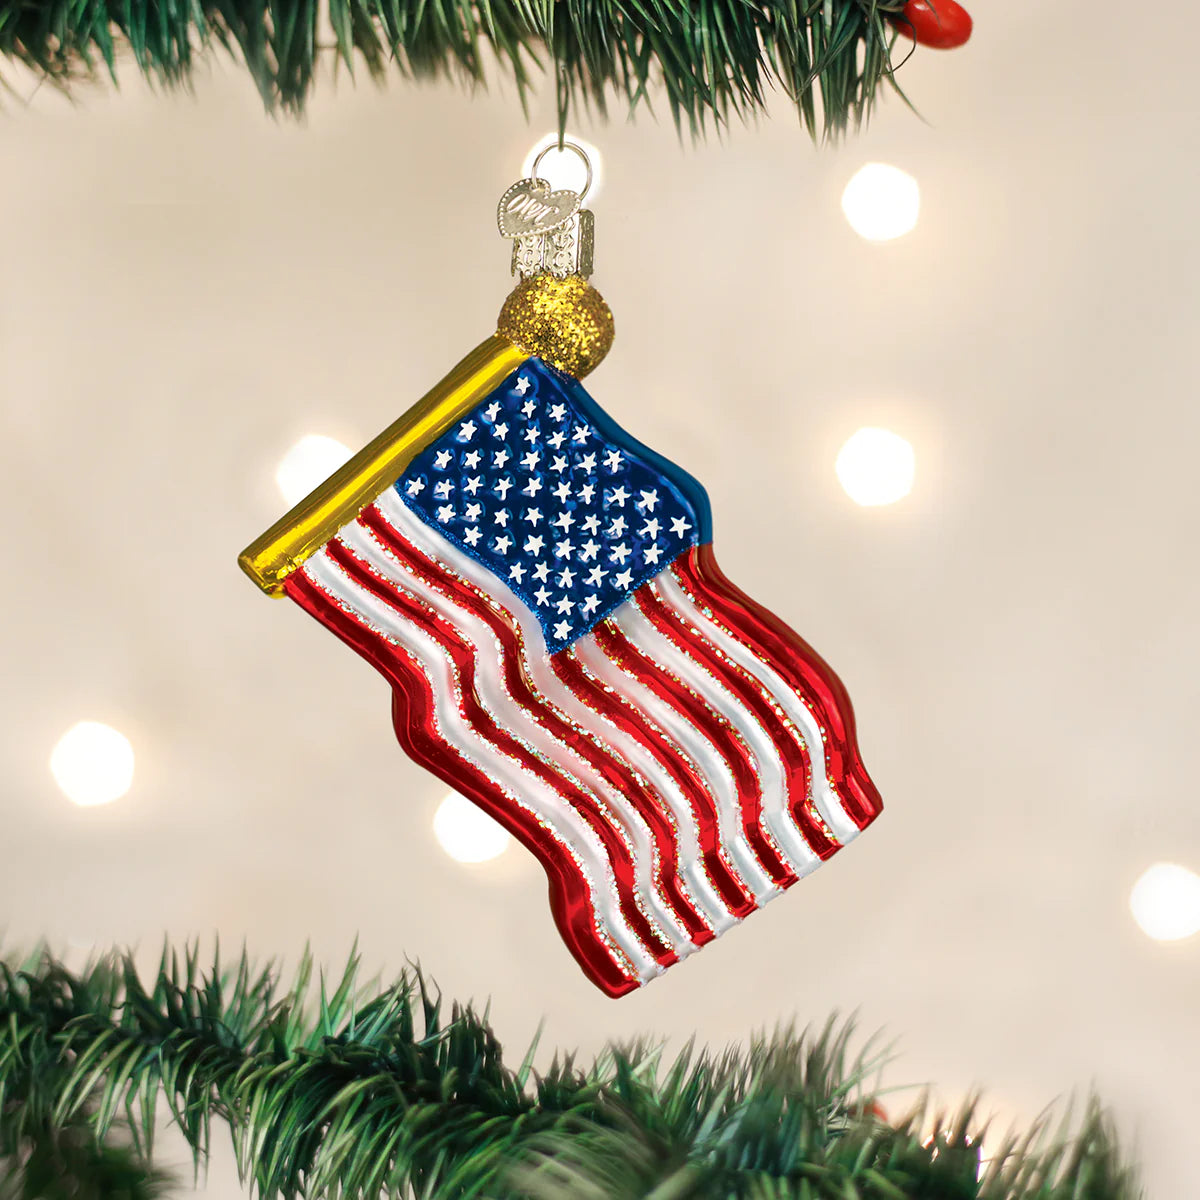 Old World Christmas - Star-spangled Banner Ornament